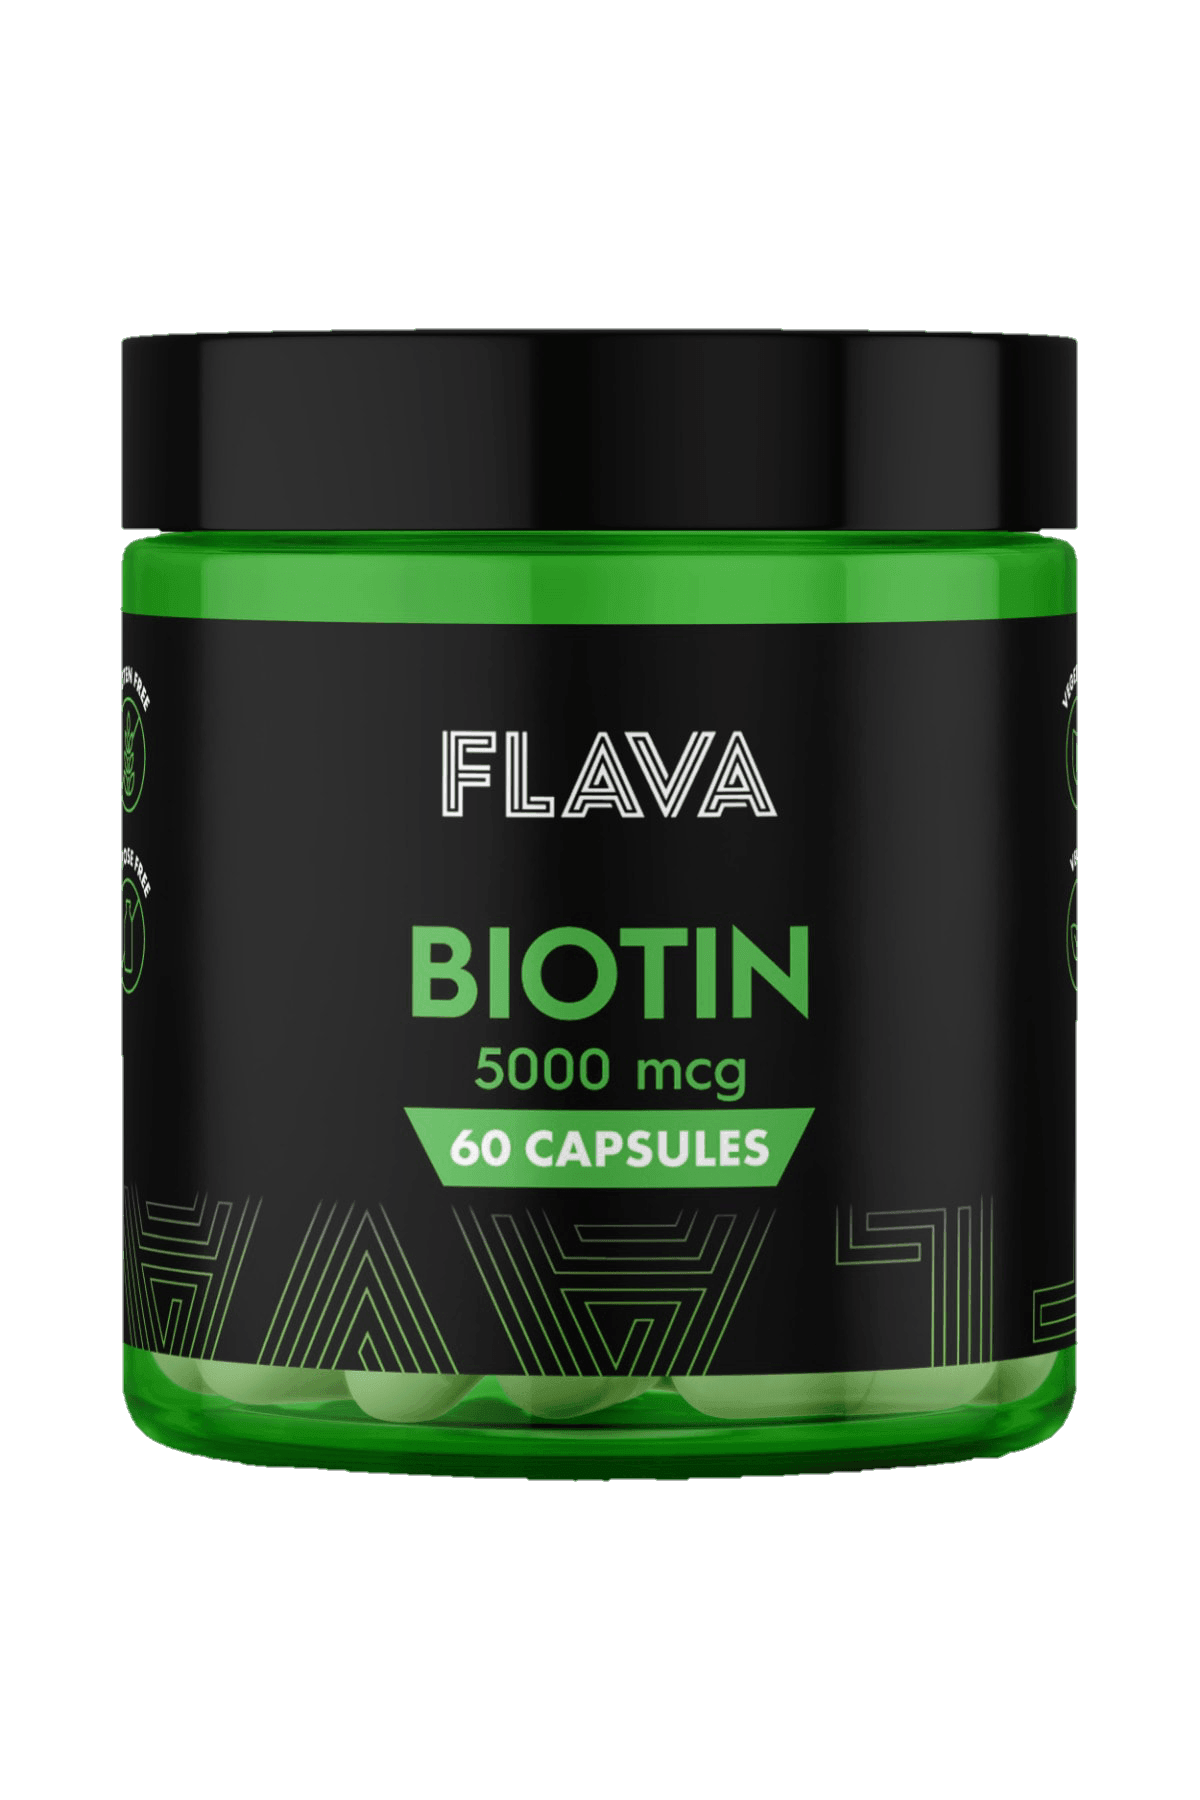 Flava Biotin - The Supplements Factory